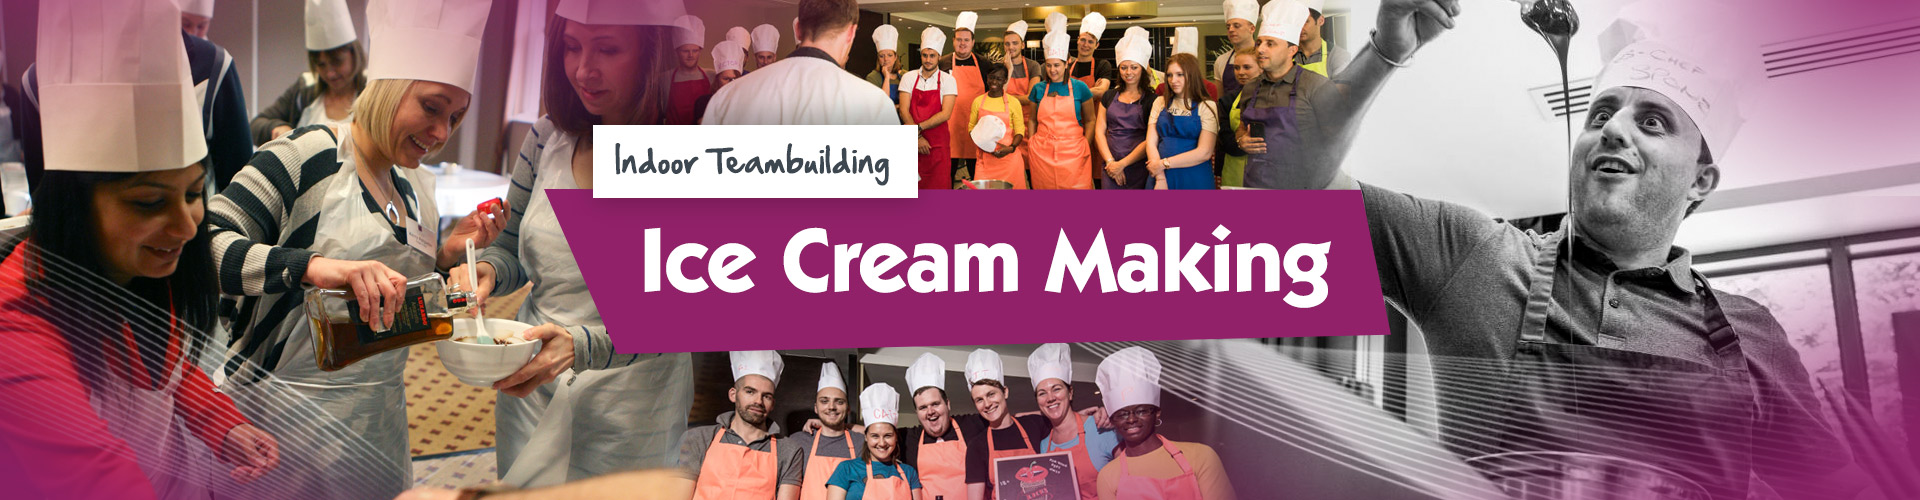 Teambuilding | Ice Cream Making